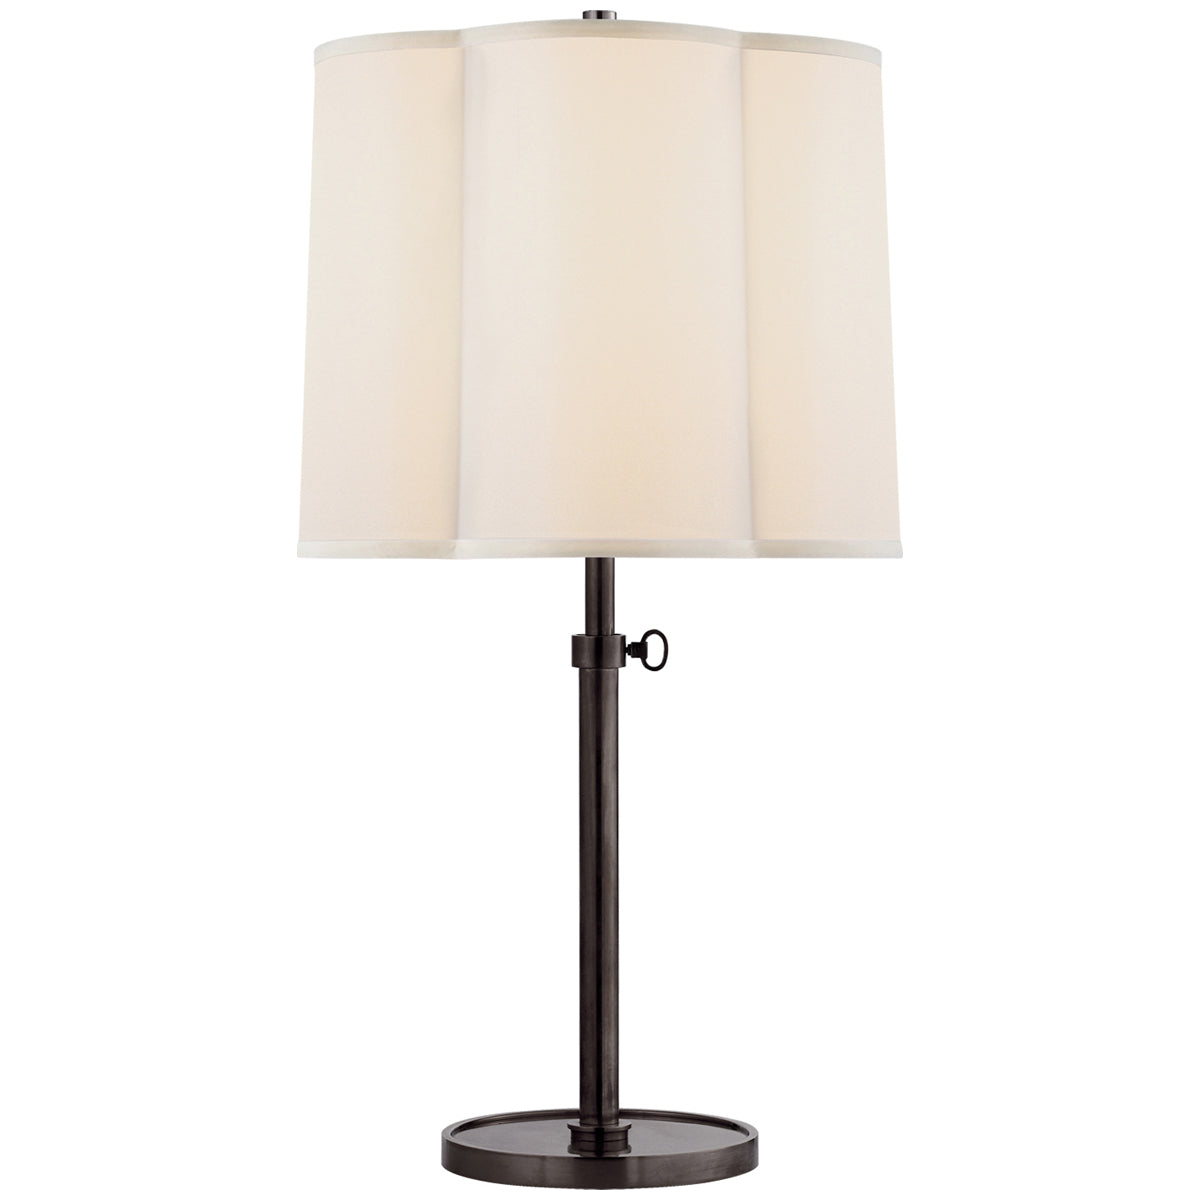 Visual Comfort Simple Adjustable Scallop Table Lamp